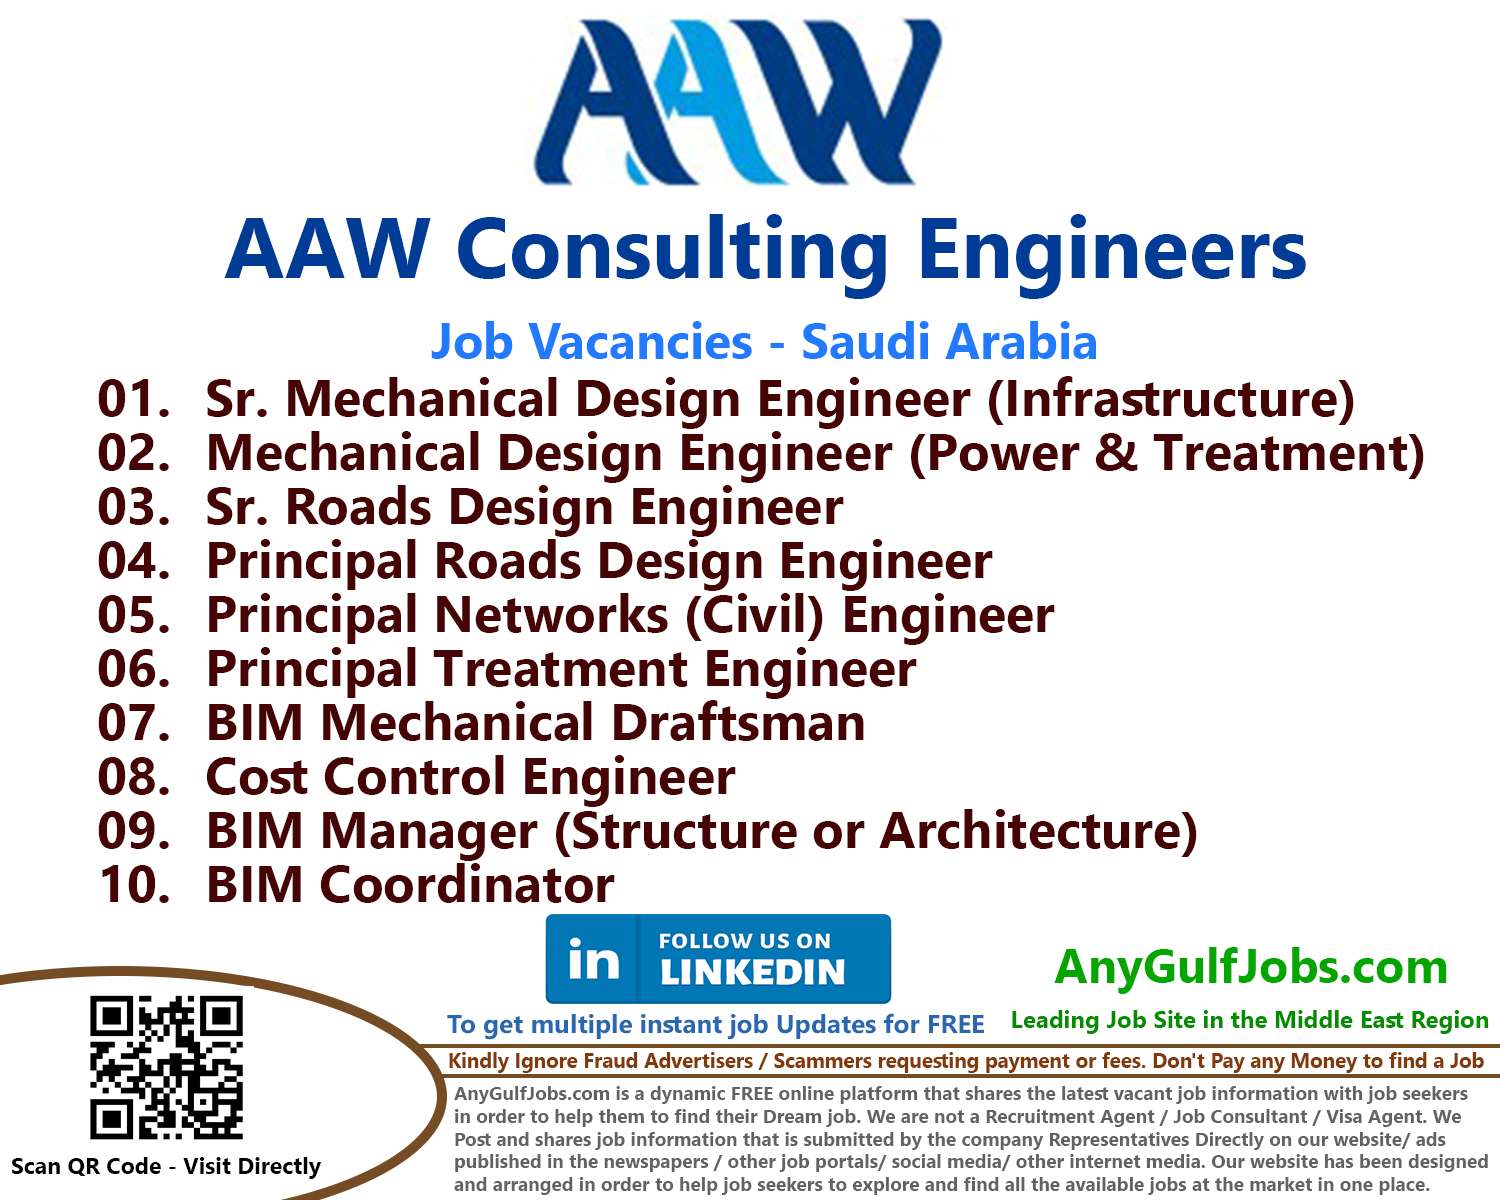 List of AAW Consulting Engineers Jobs - Saudi Arabia